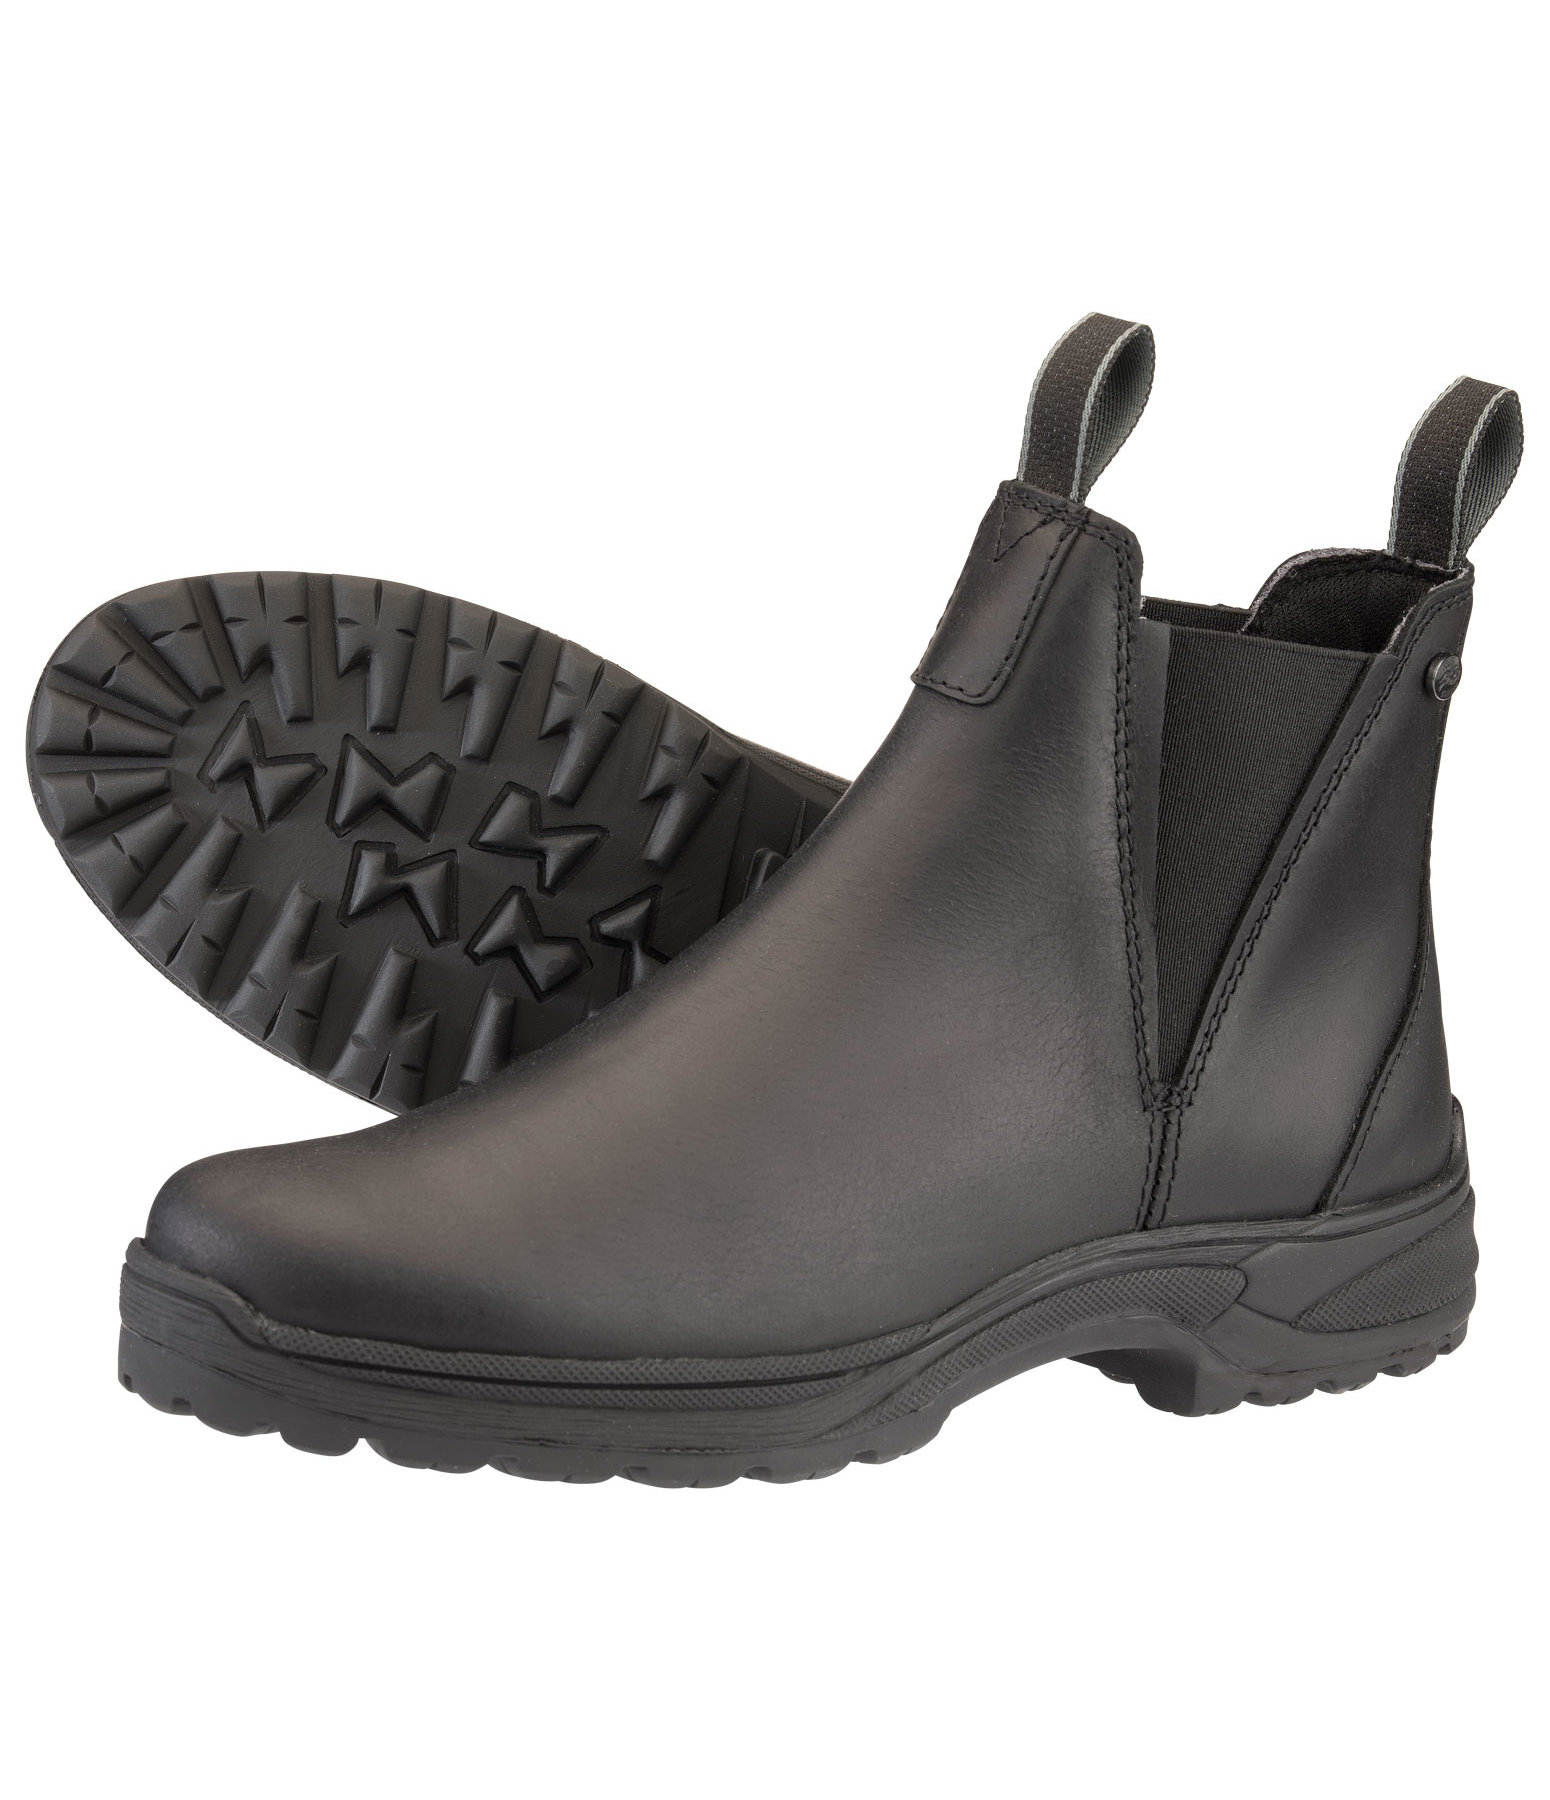 equestrian steel toe boots